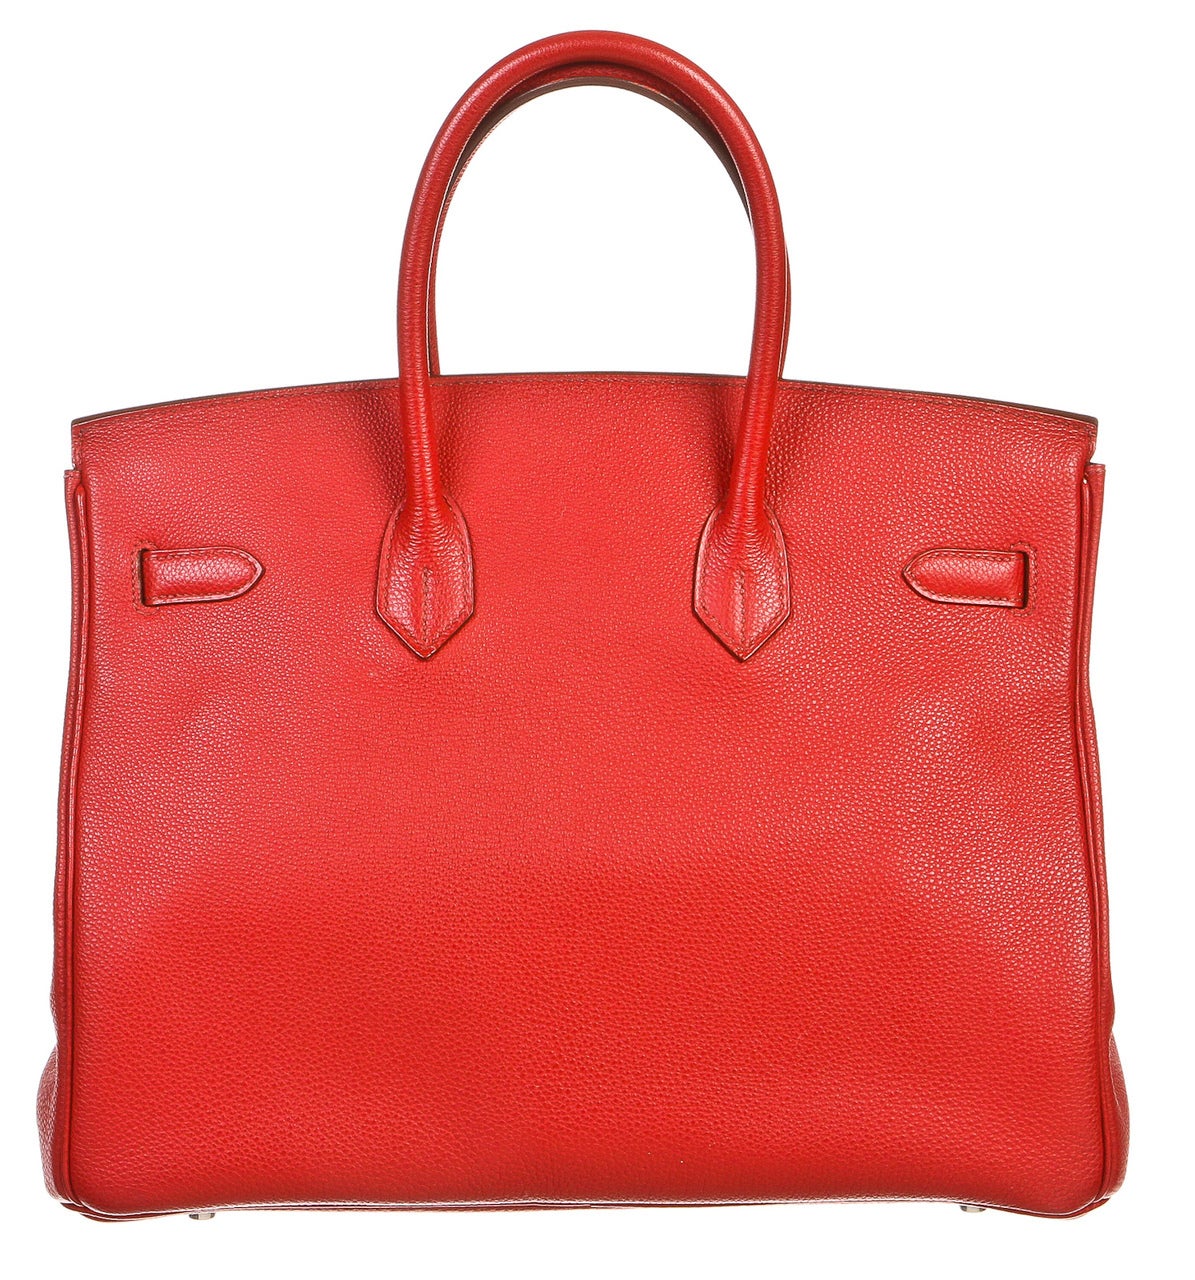 Hermes Vermilion (Red) Birkin 35cm Togo Leather Handbag PHW In Excellent Condition For Sale In Corona Del Mar, CA